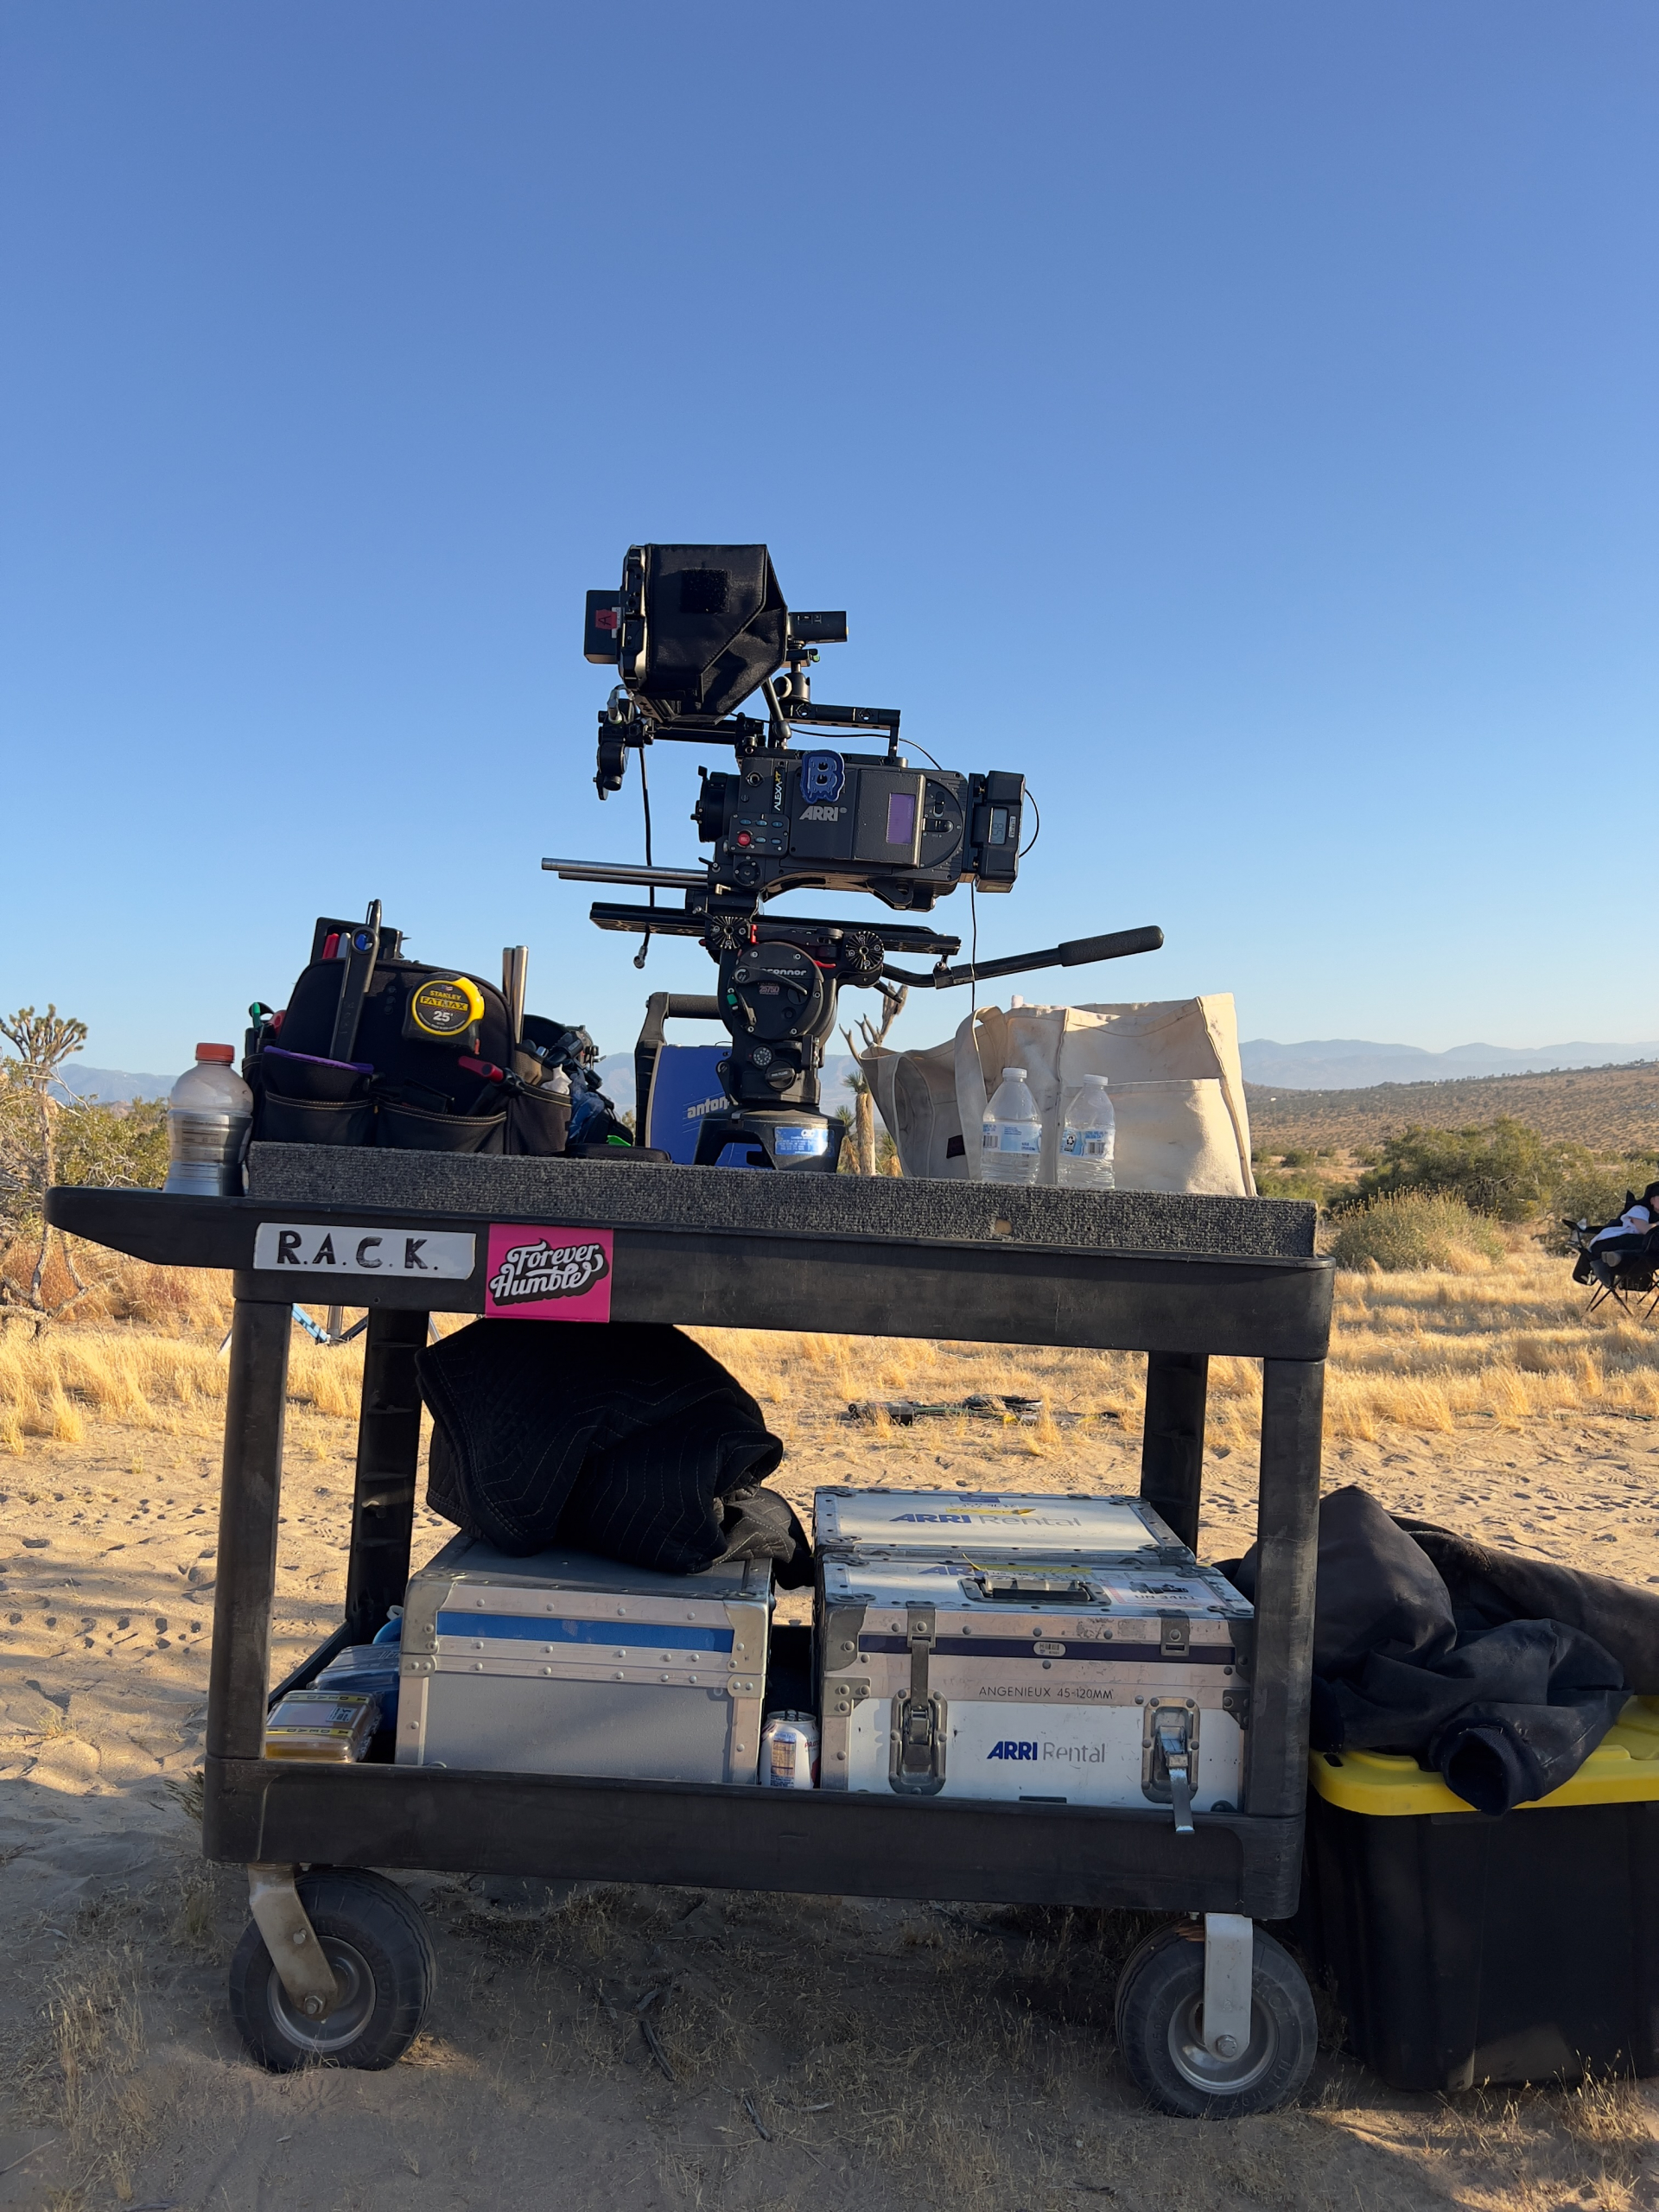 Camera Cart full of accessories in the Desert